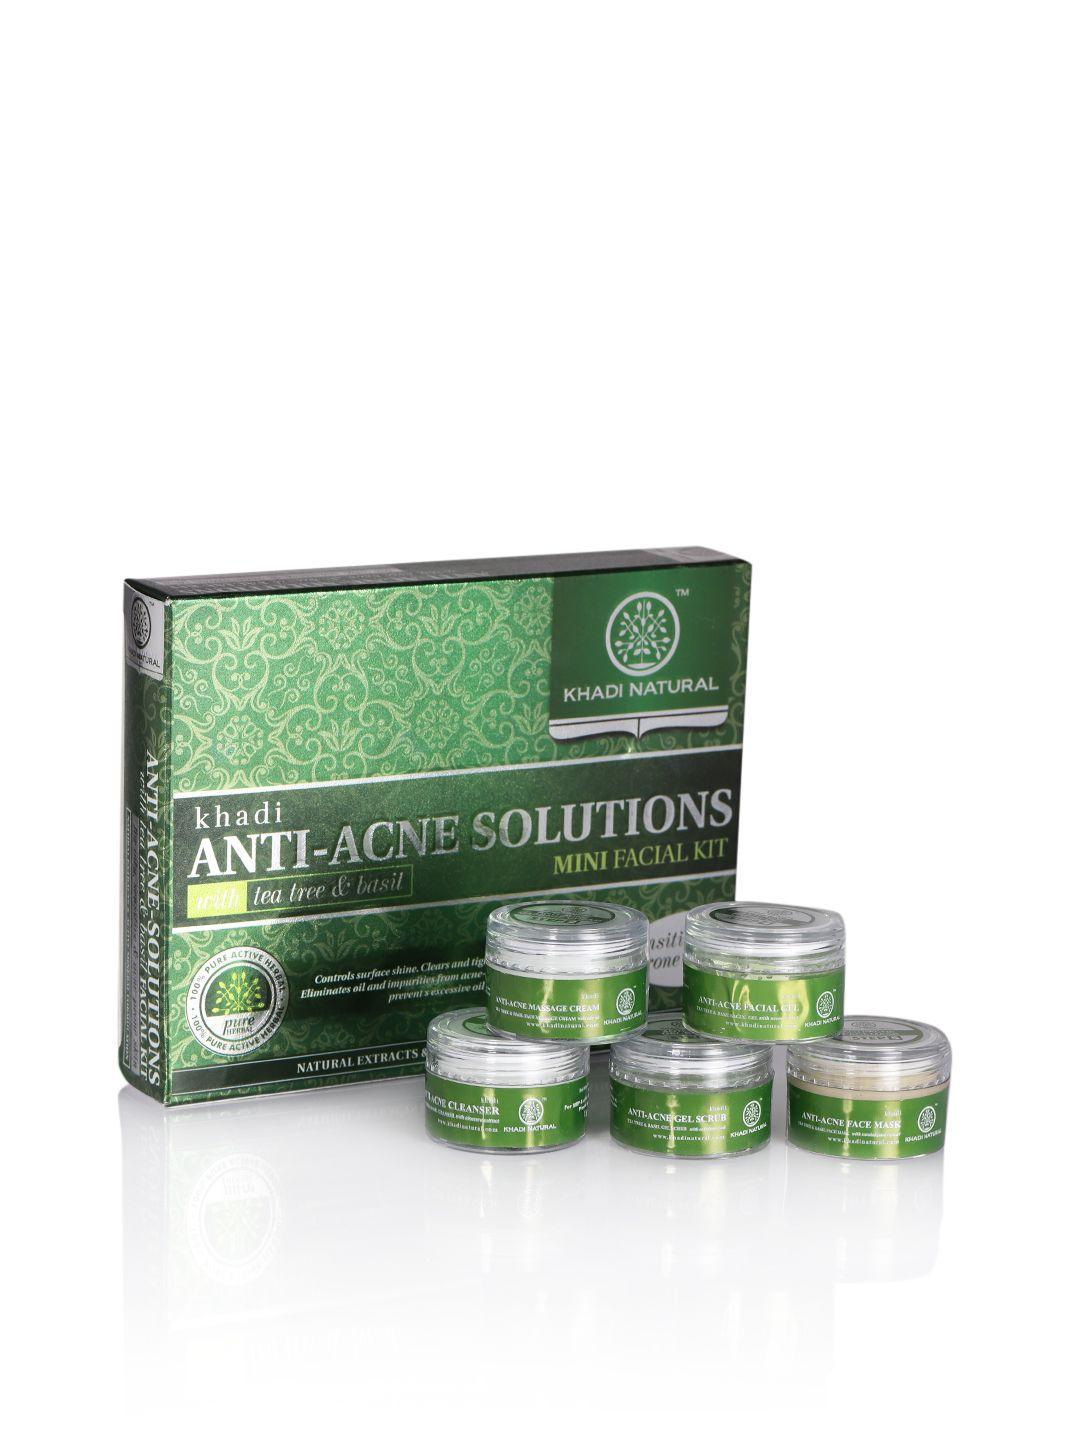 khadi natural anti-acne solutions mini facial kit